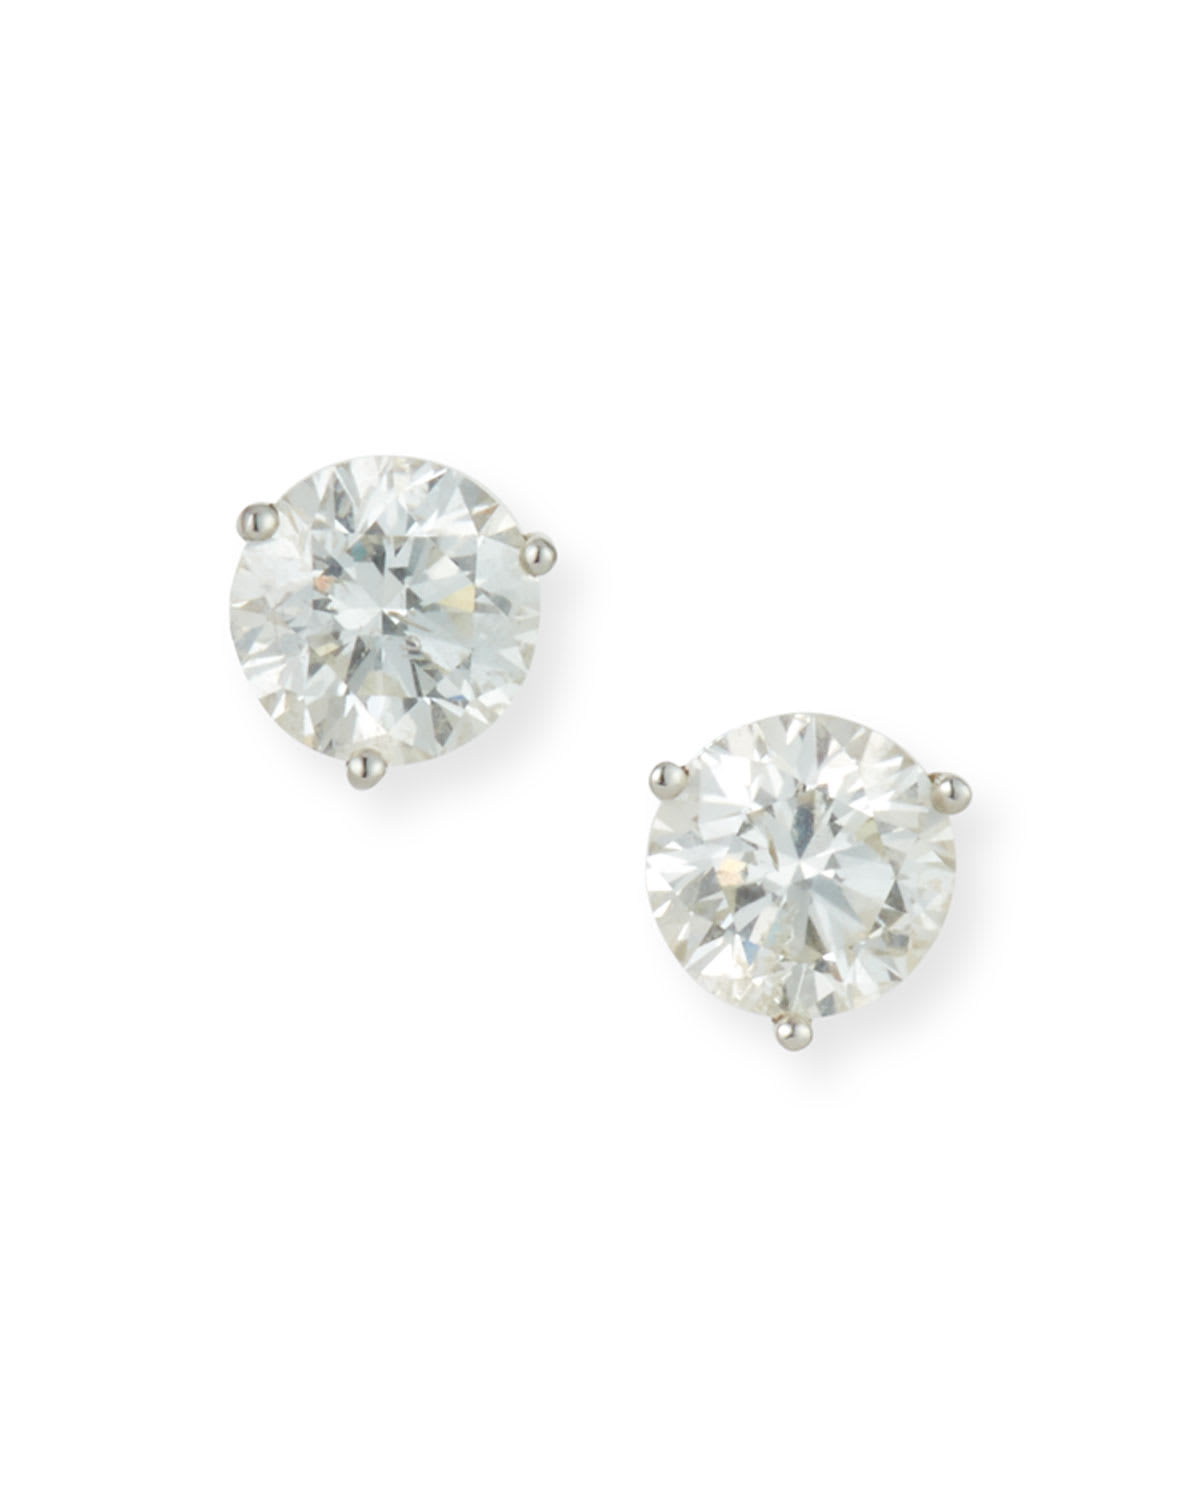 NM Diamond Collection Platinum Diamond Earrings